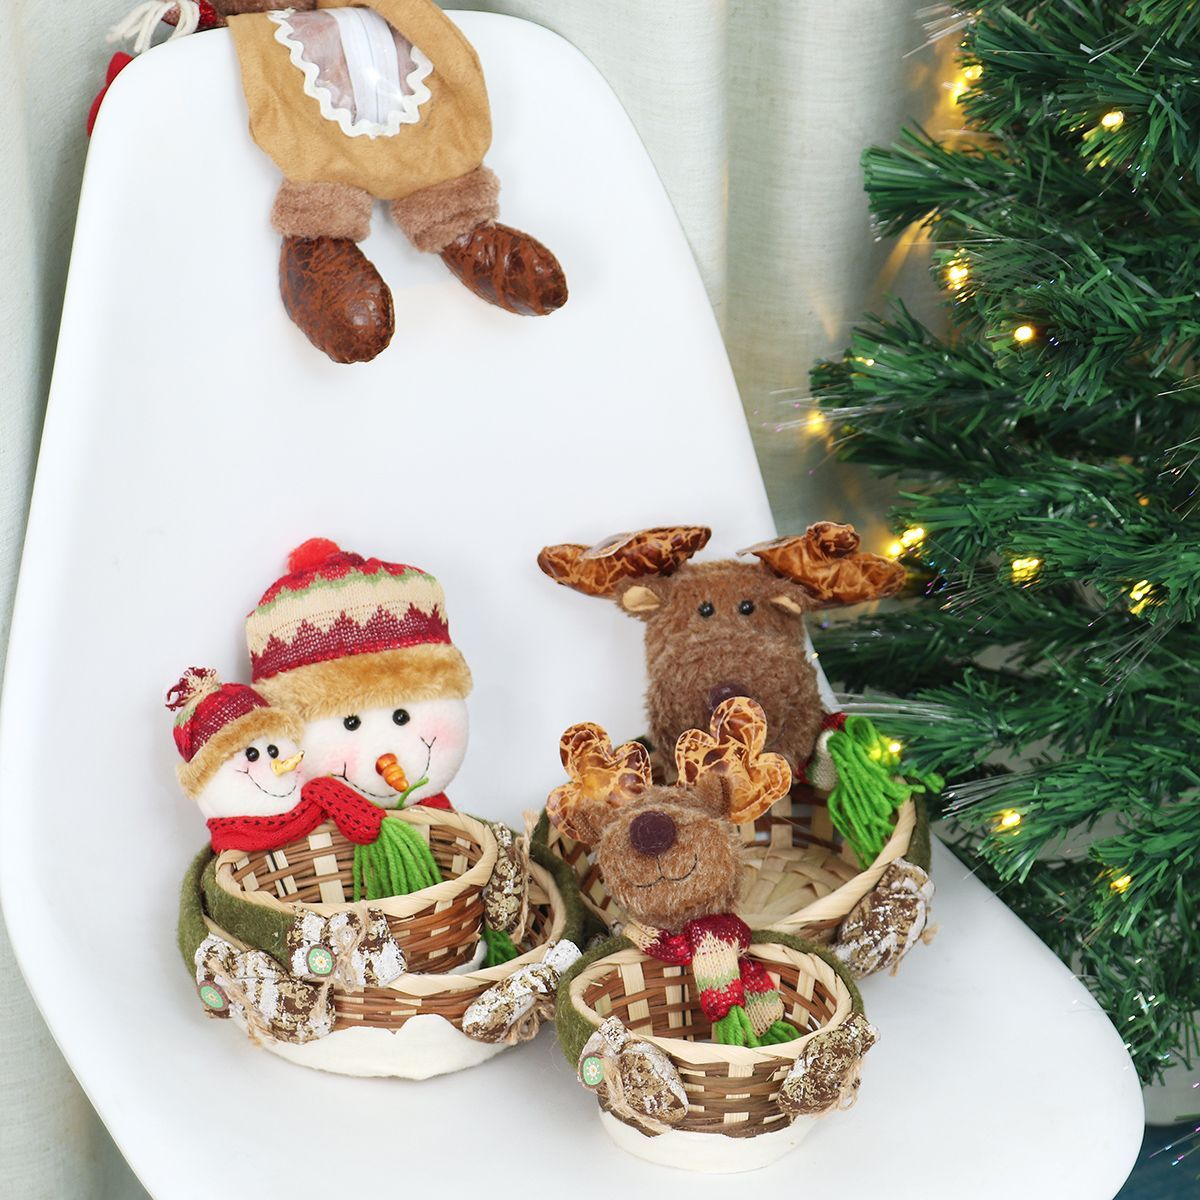 Christmas-Decoration-Candy-Basket-Desktop-Ornaments-Children-Candy-Basket-Decoration-Candy-Box-1753094